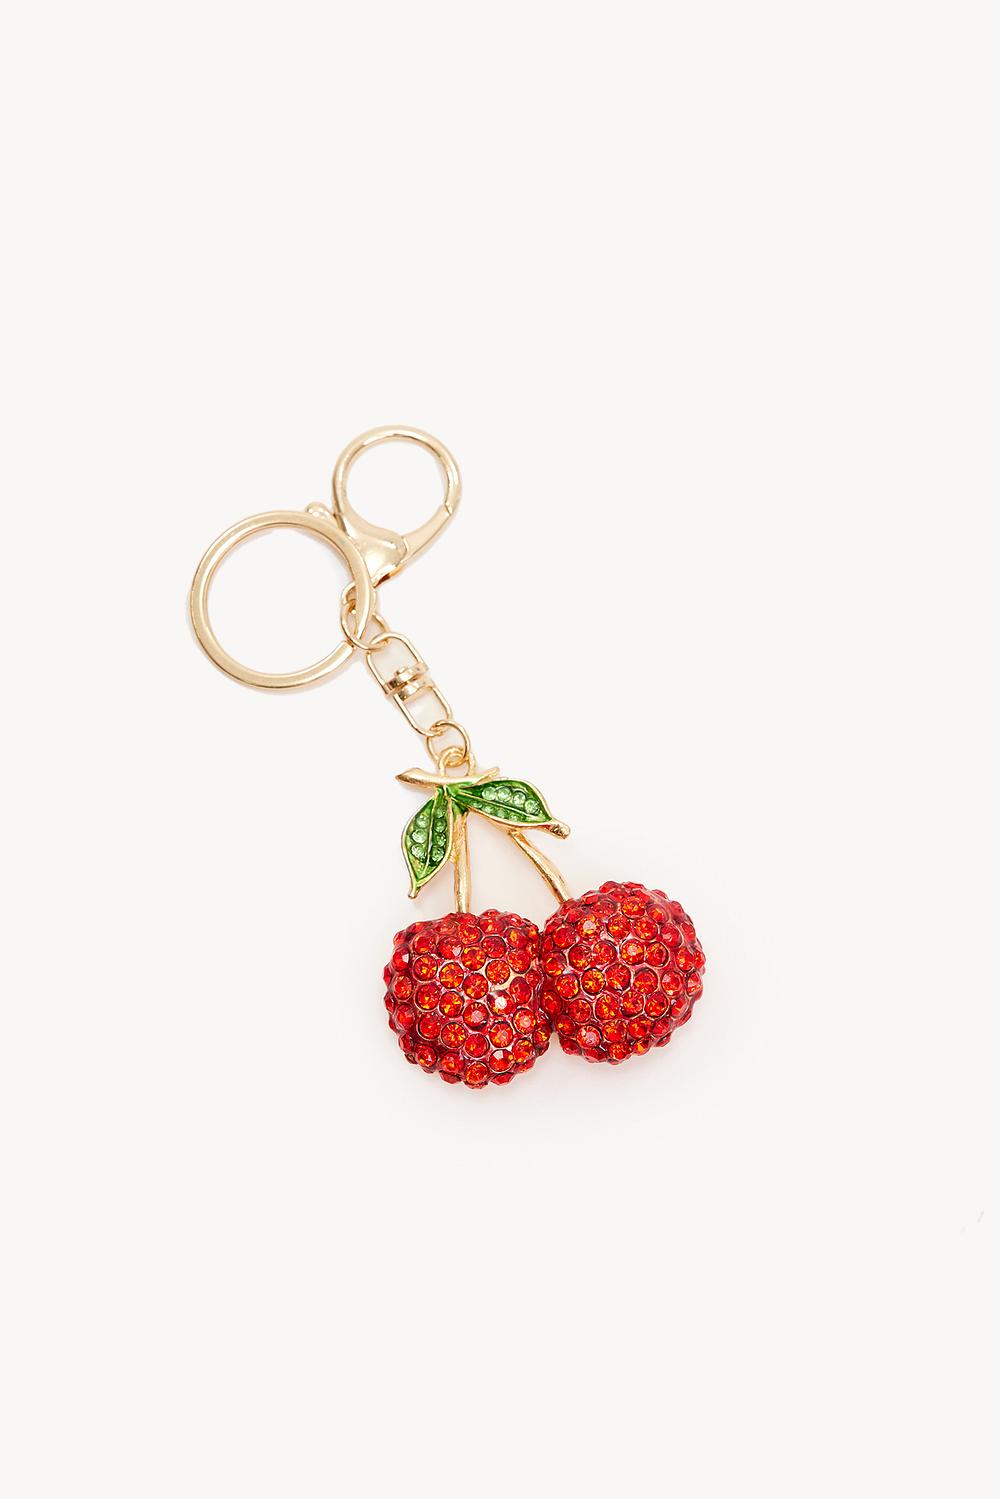 Red cherry key ring